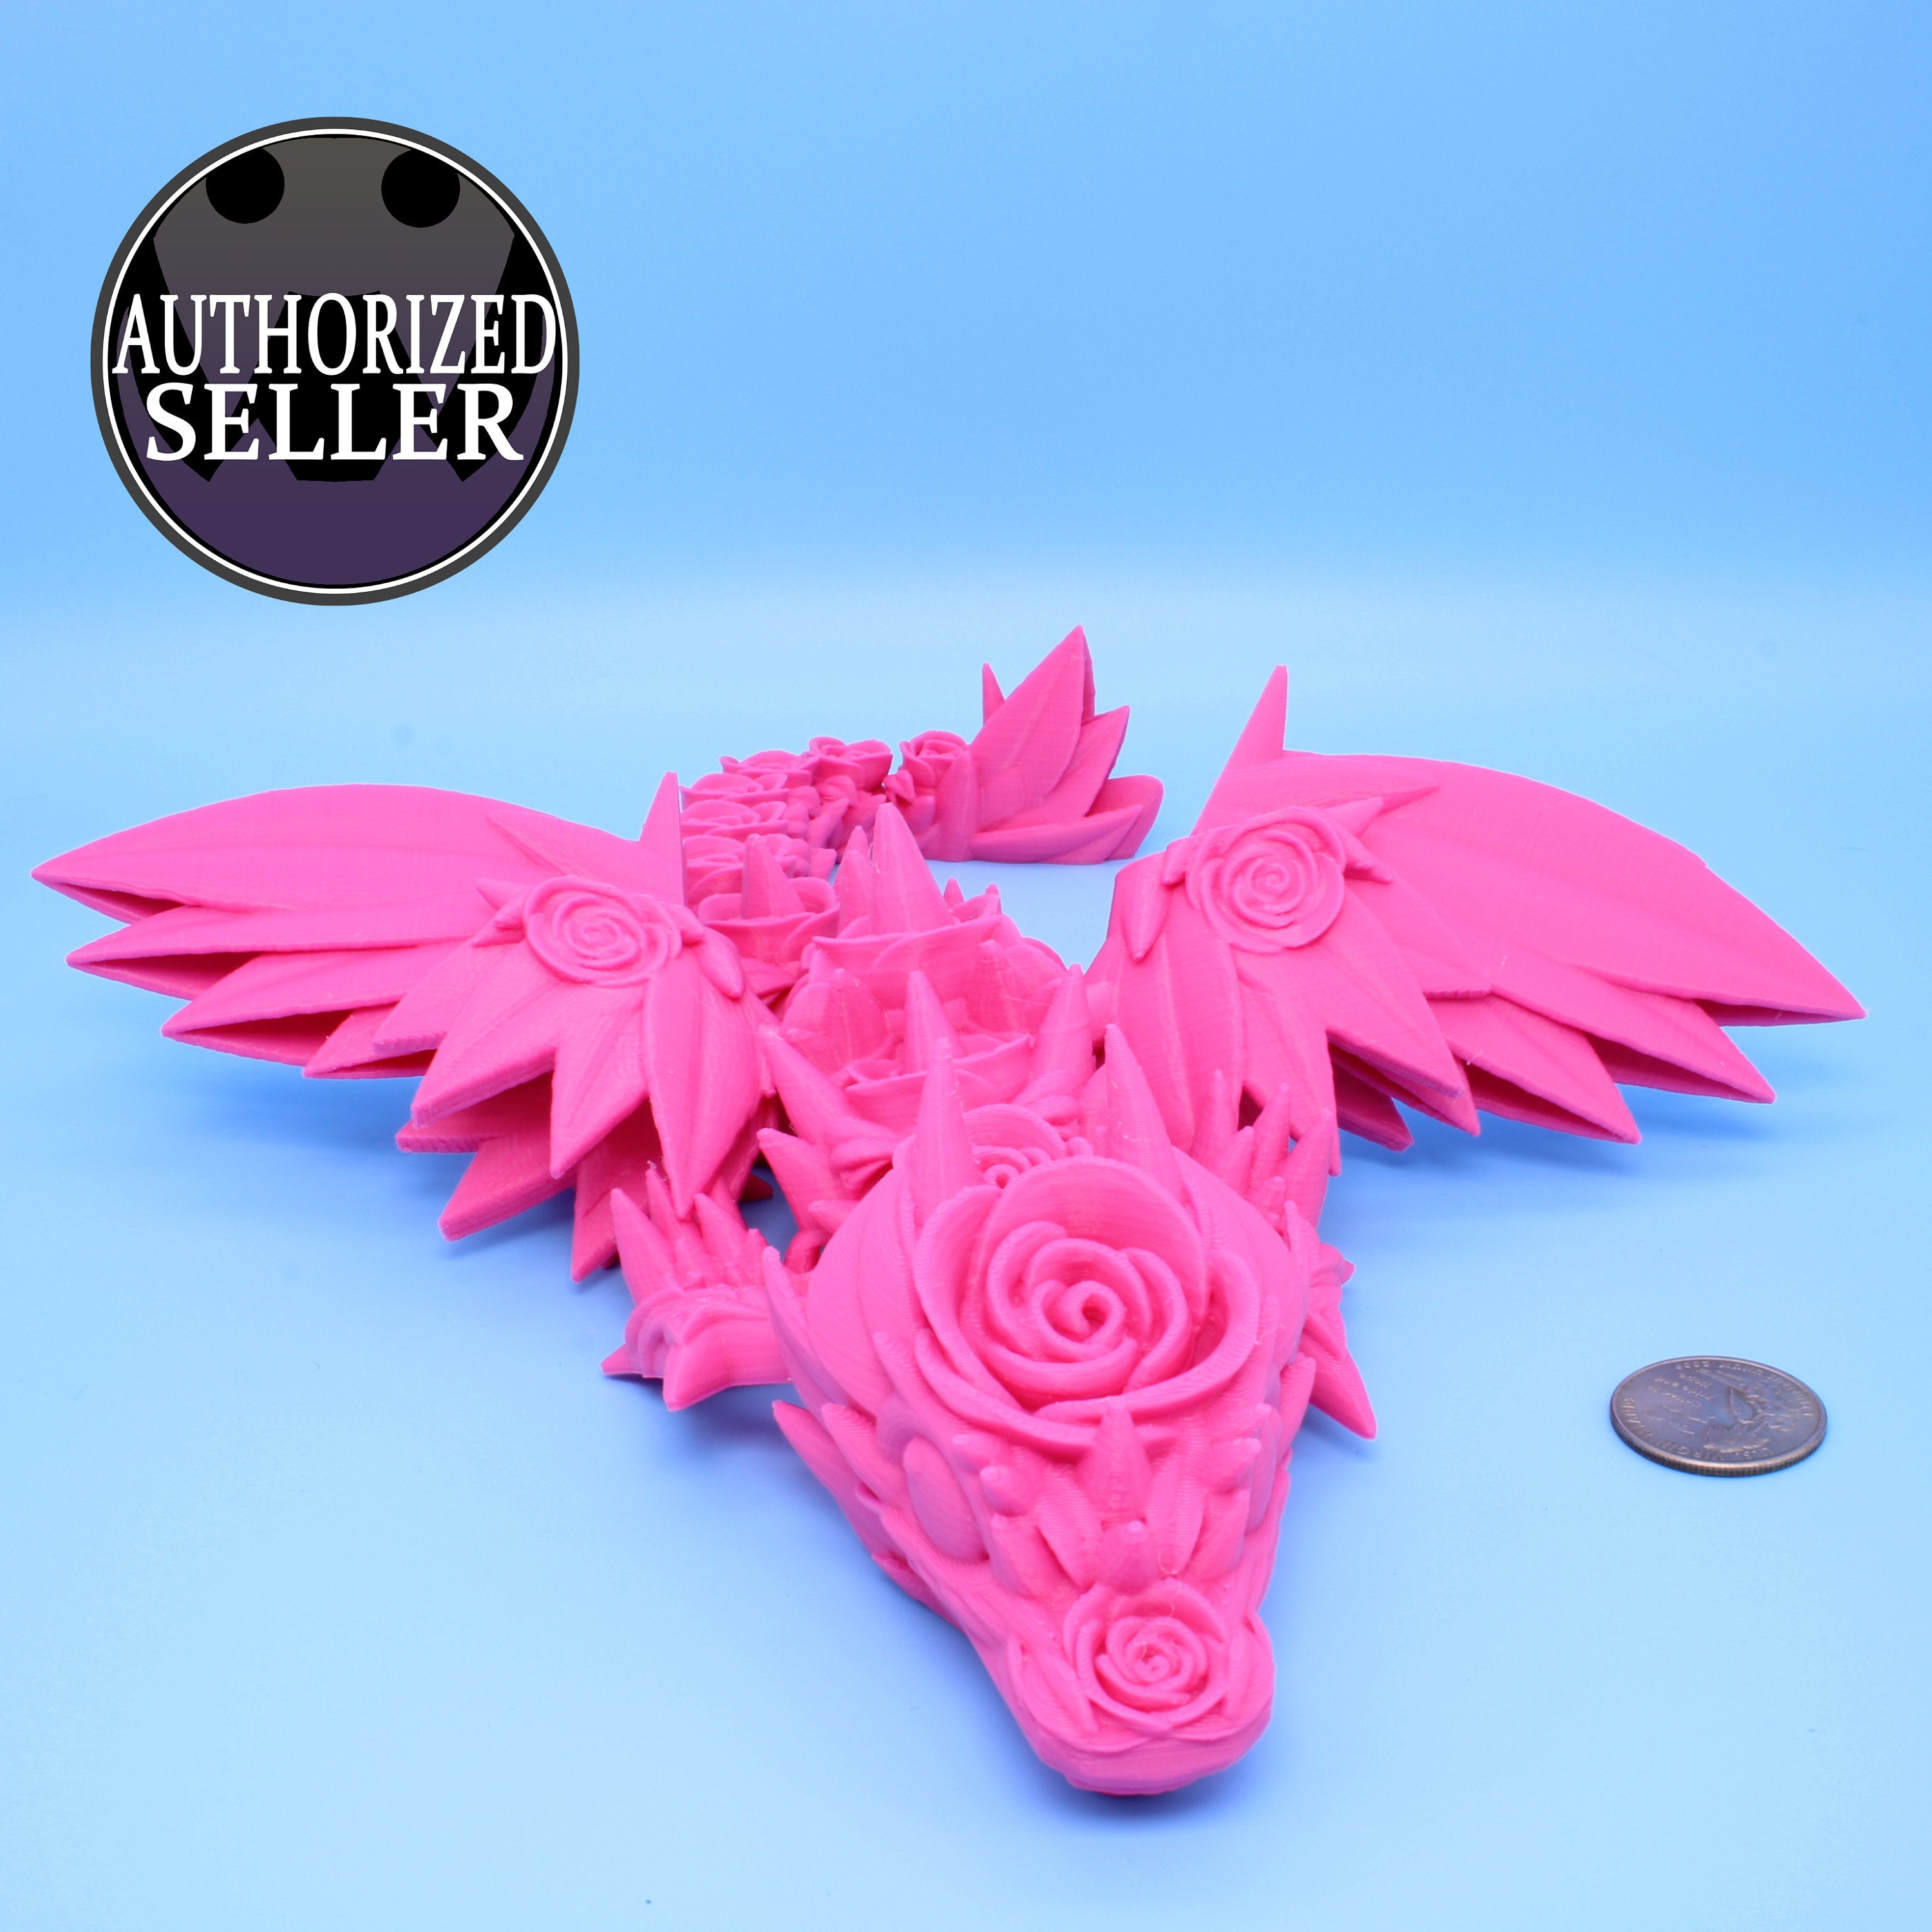 Baby Rose Wing Dragon | Pink | 3D printed articulating